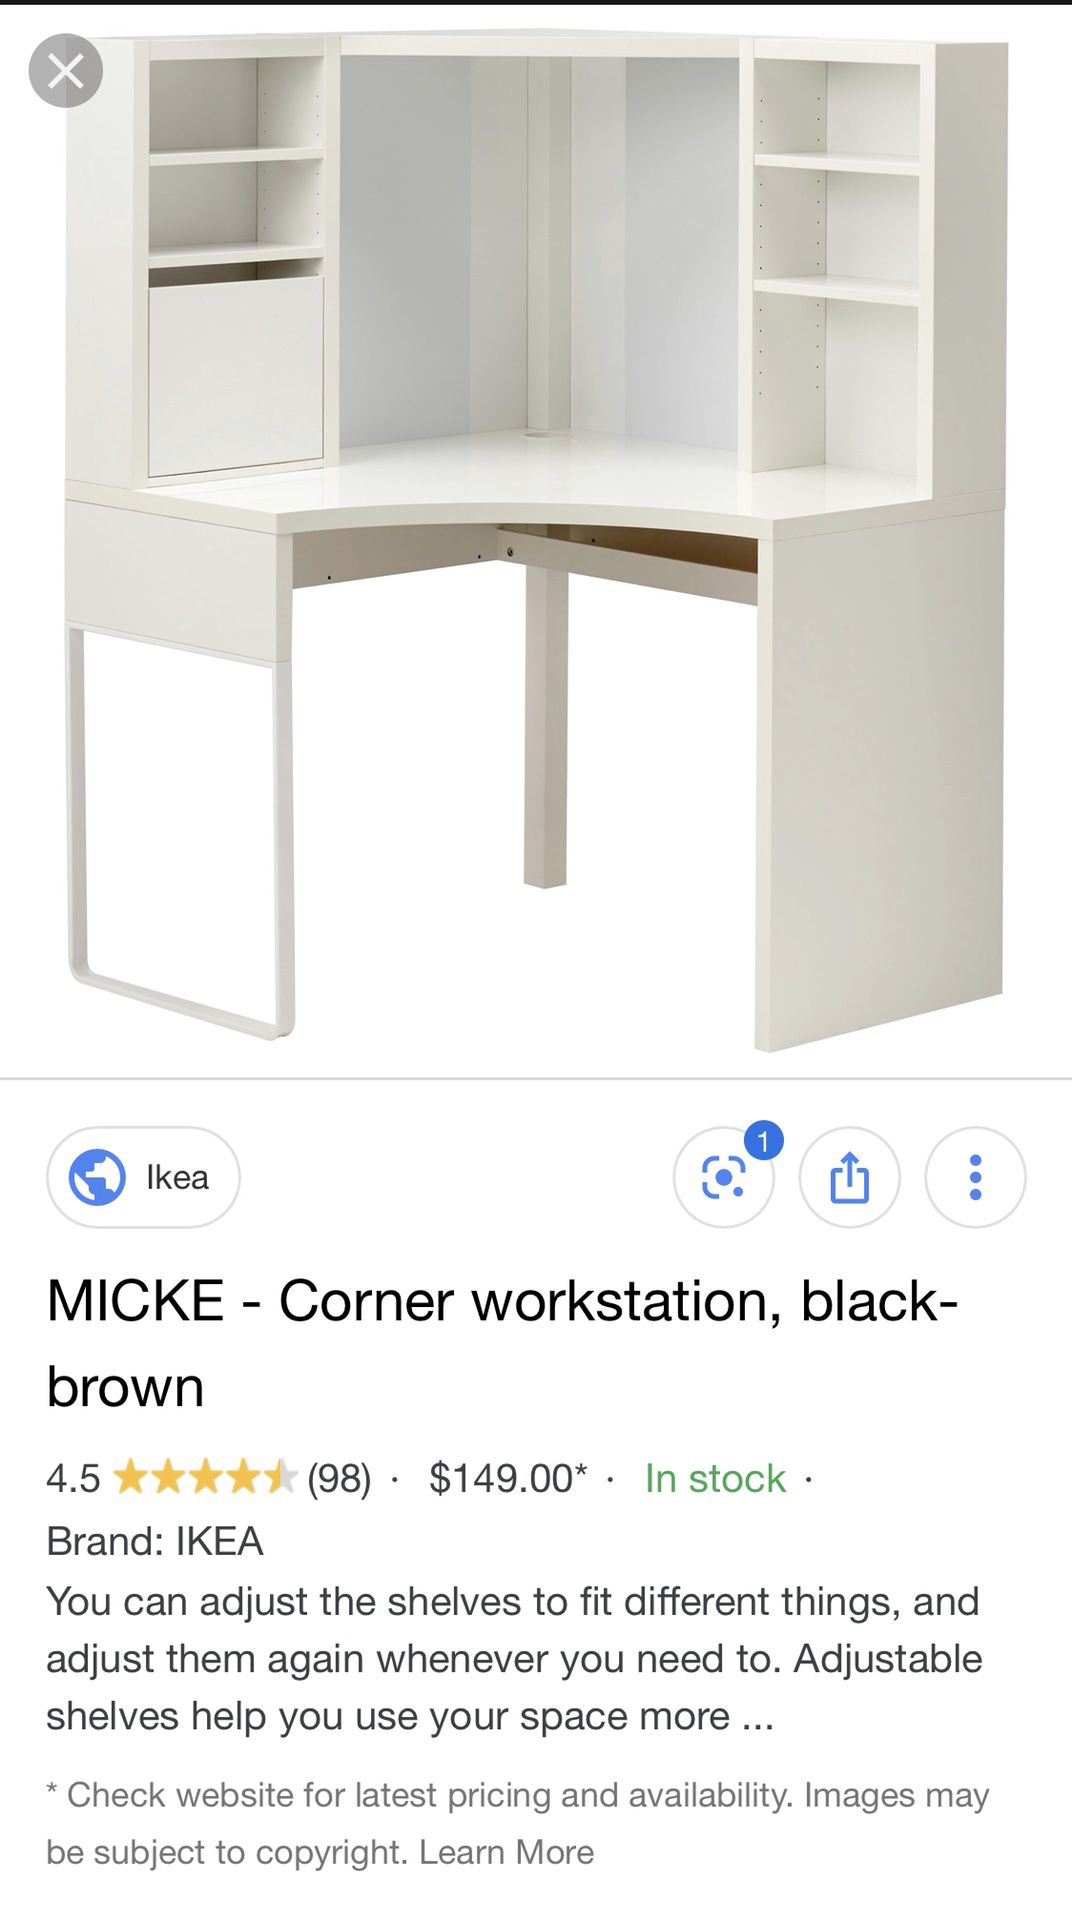 IKEA MICKE Desk- Make an offer